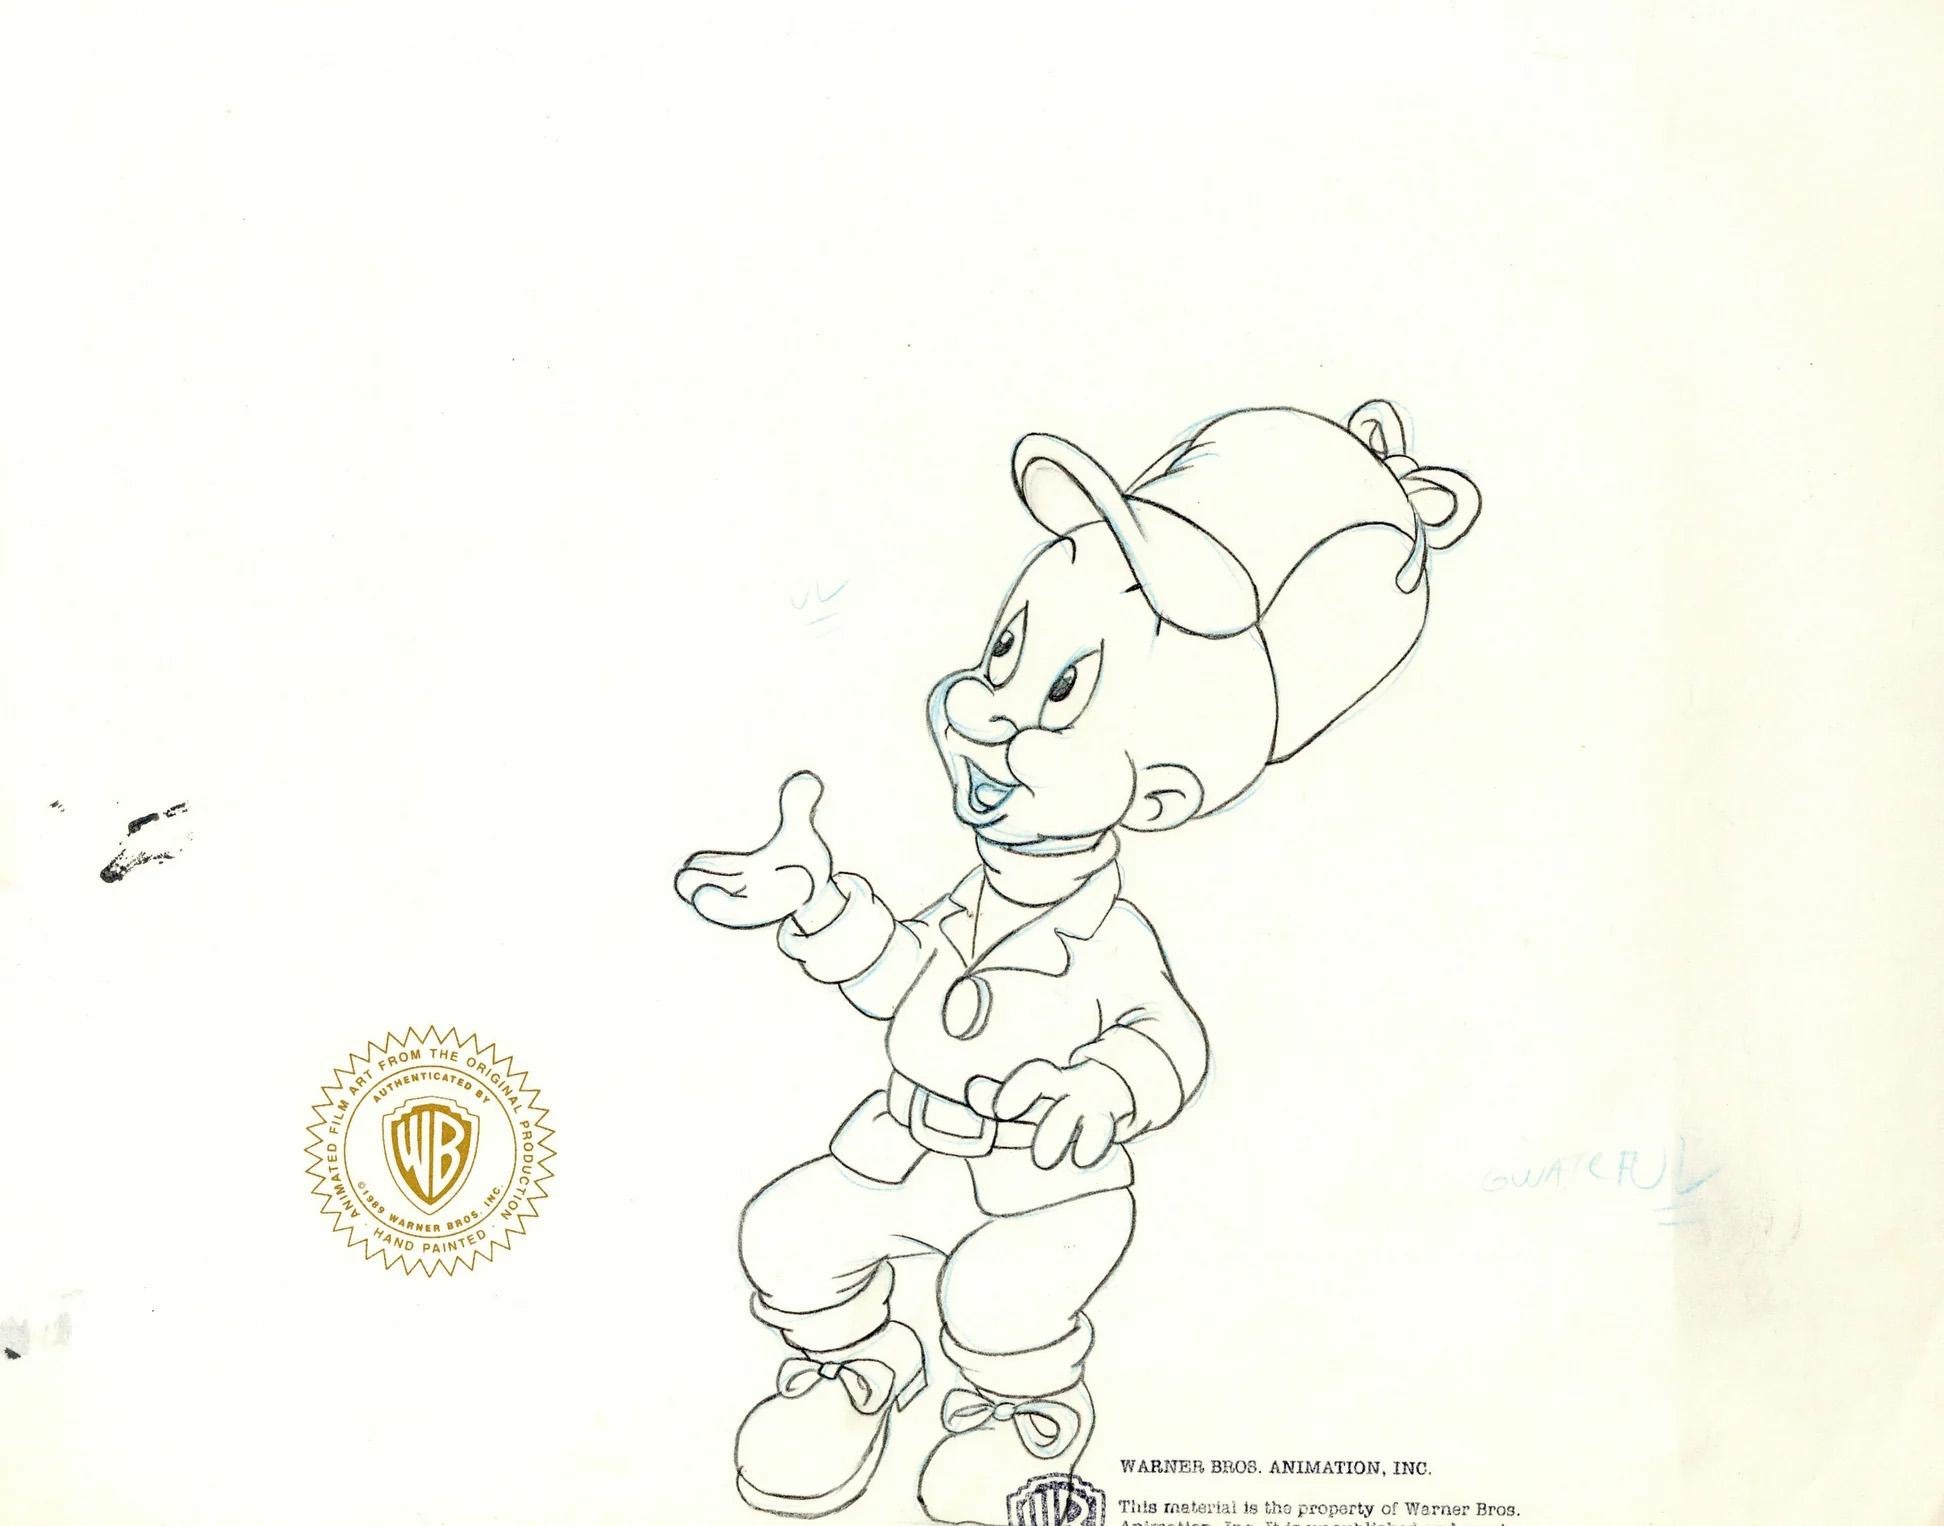 Looney Tunes Original Production Drawing: Elmer Fudd - Art by Looney Tunes Studio Artists